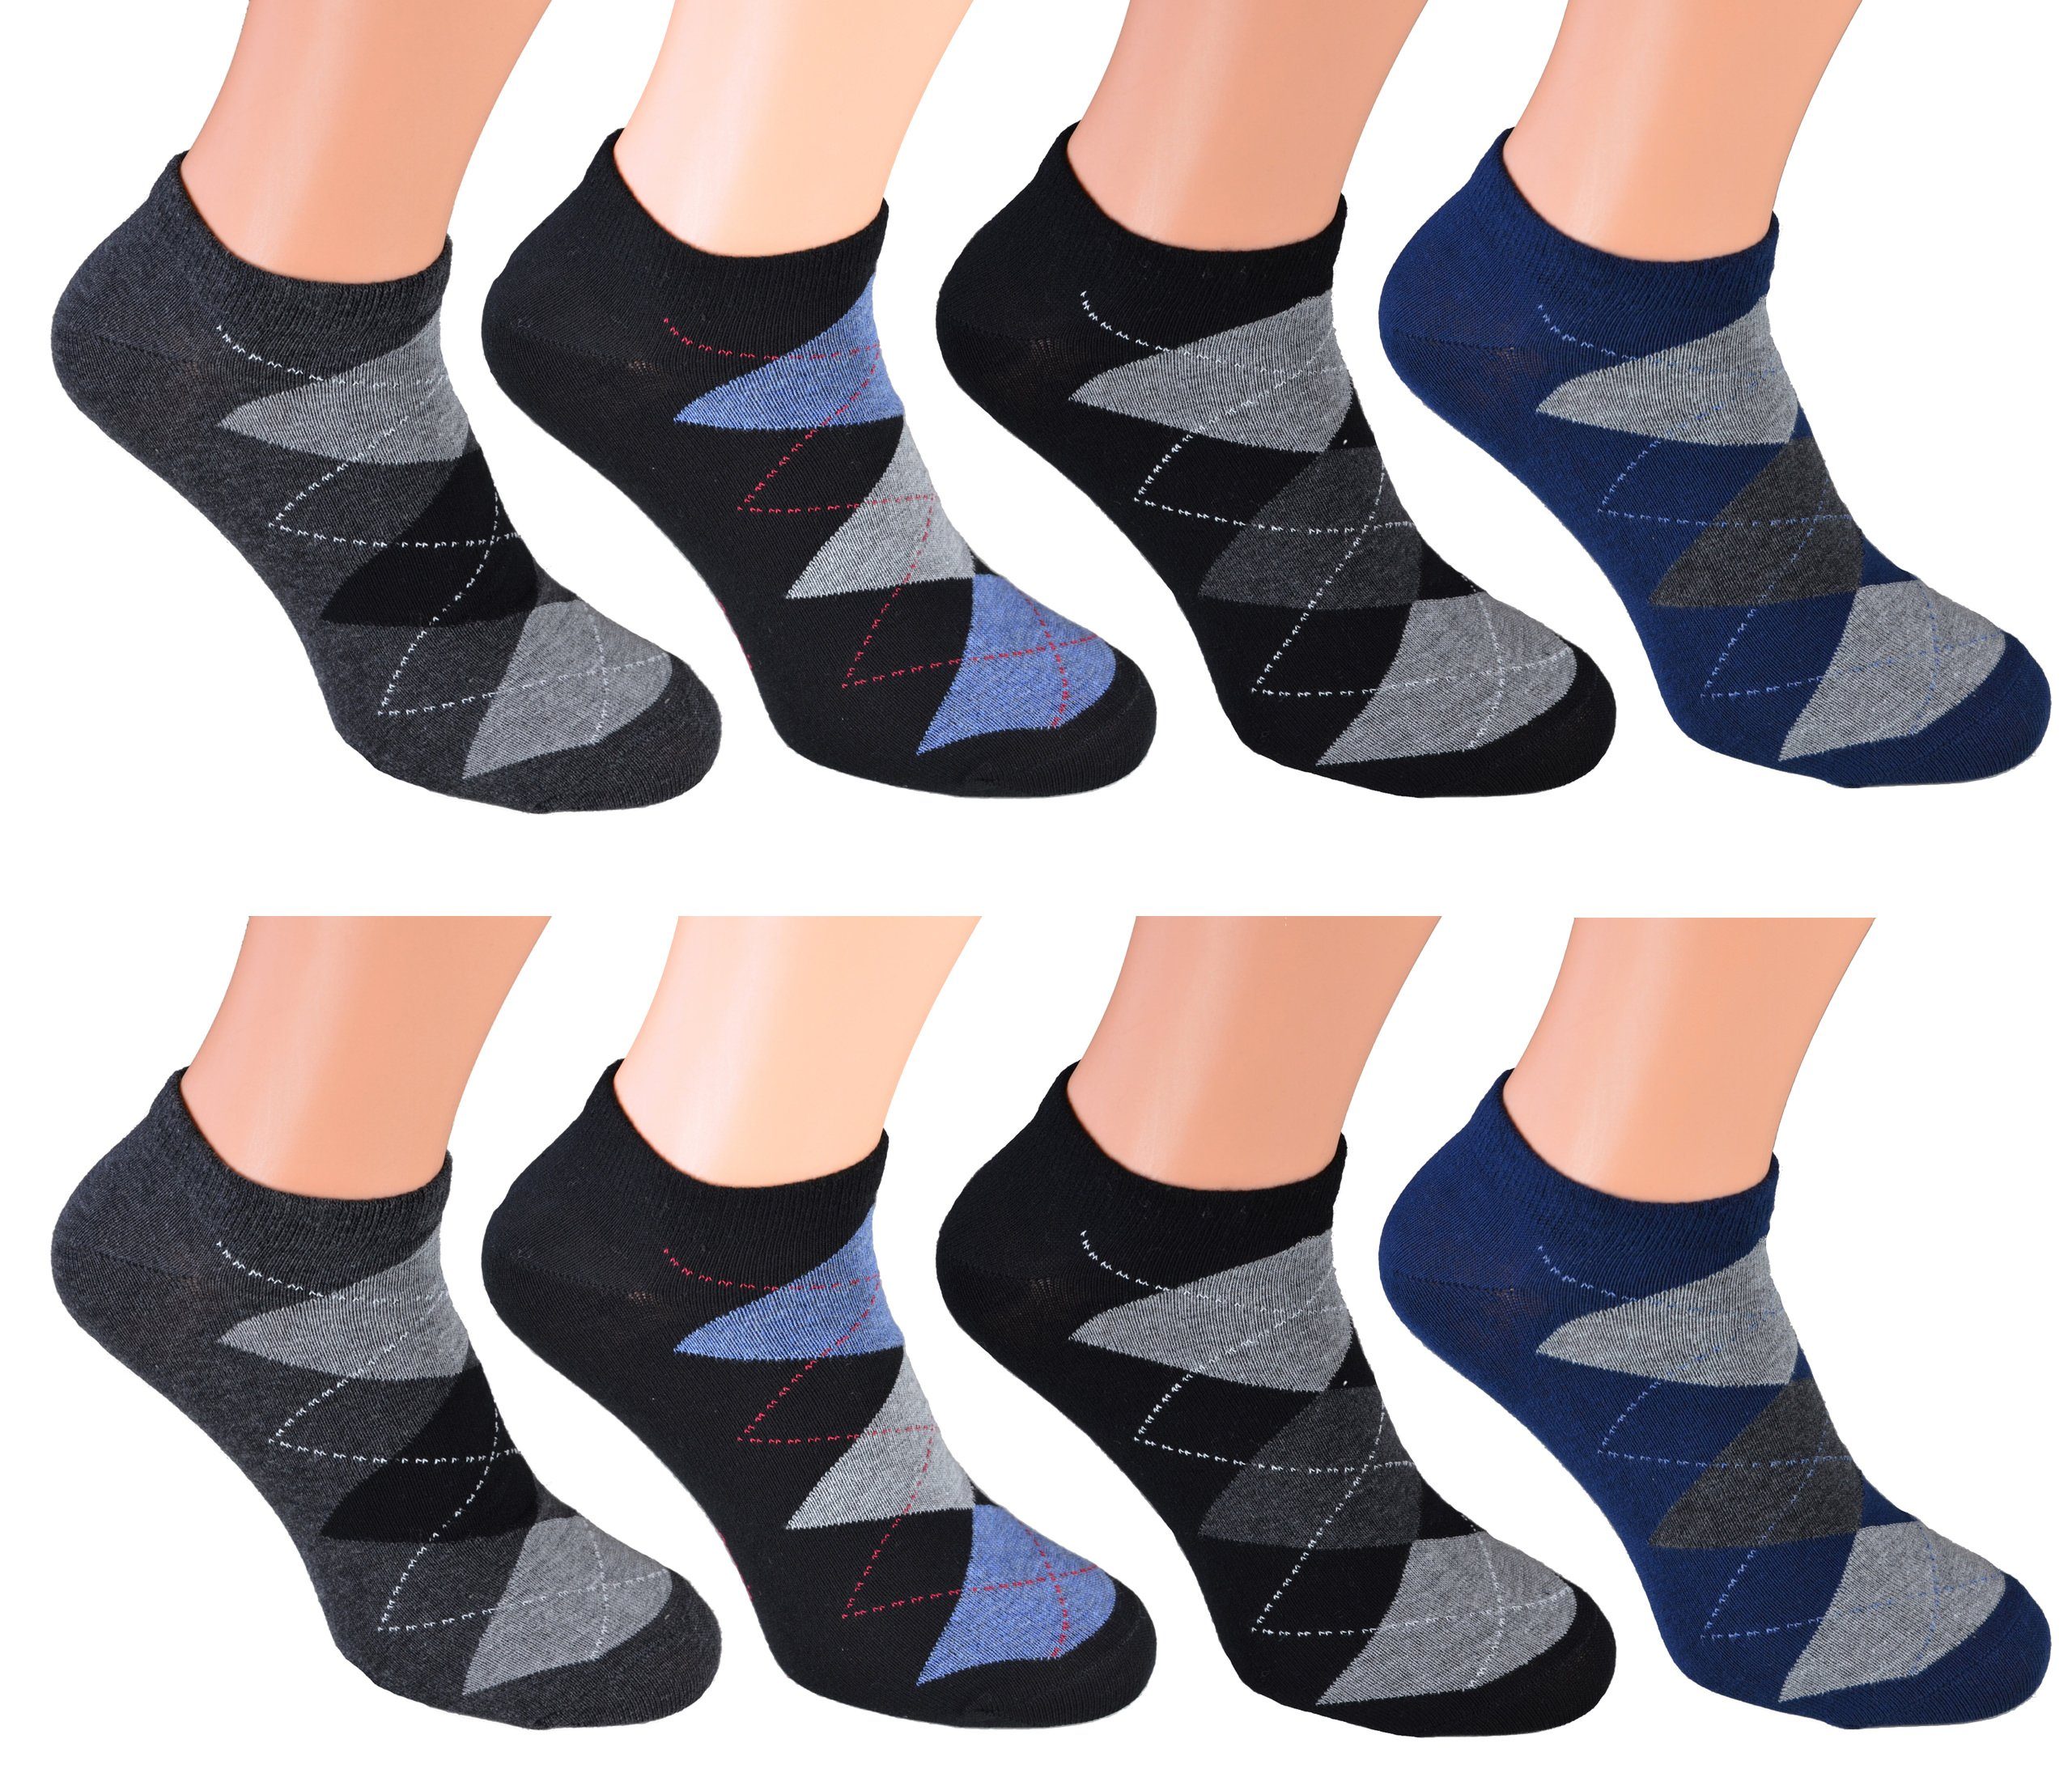 Baumwolle - Rautenmotiv Socken (8-Paar) verschiedene Söckchen Modelle Paar underwear 8 für Sneakersocken Herren Füsslinge Cocain Sneaker